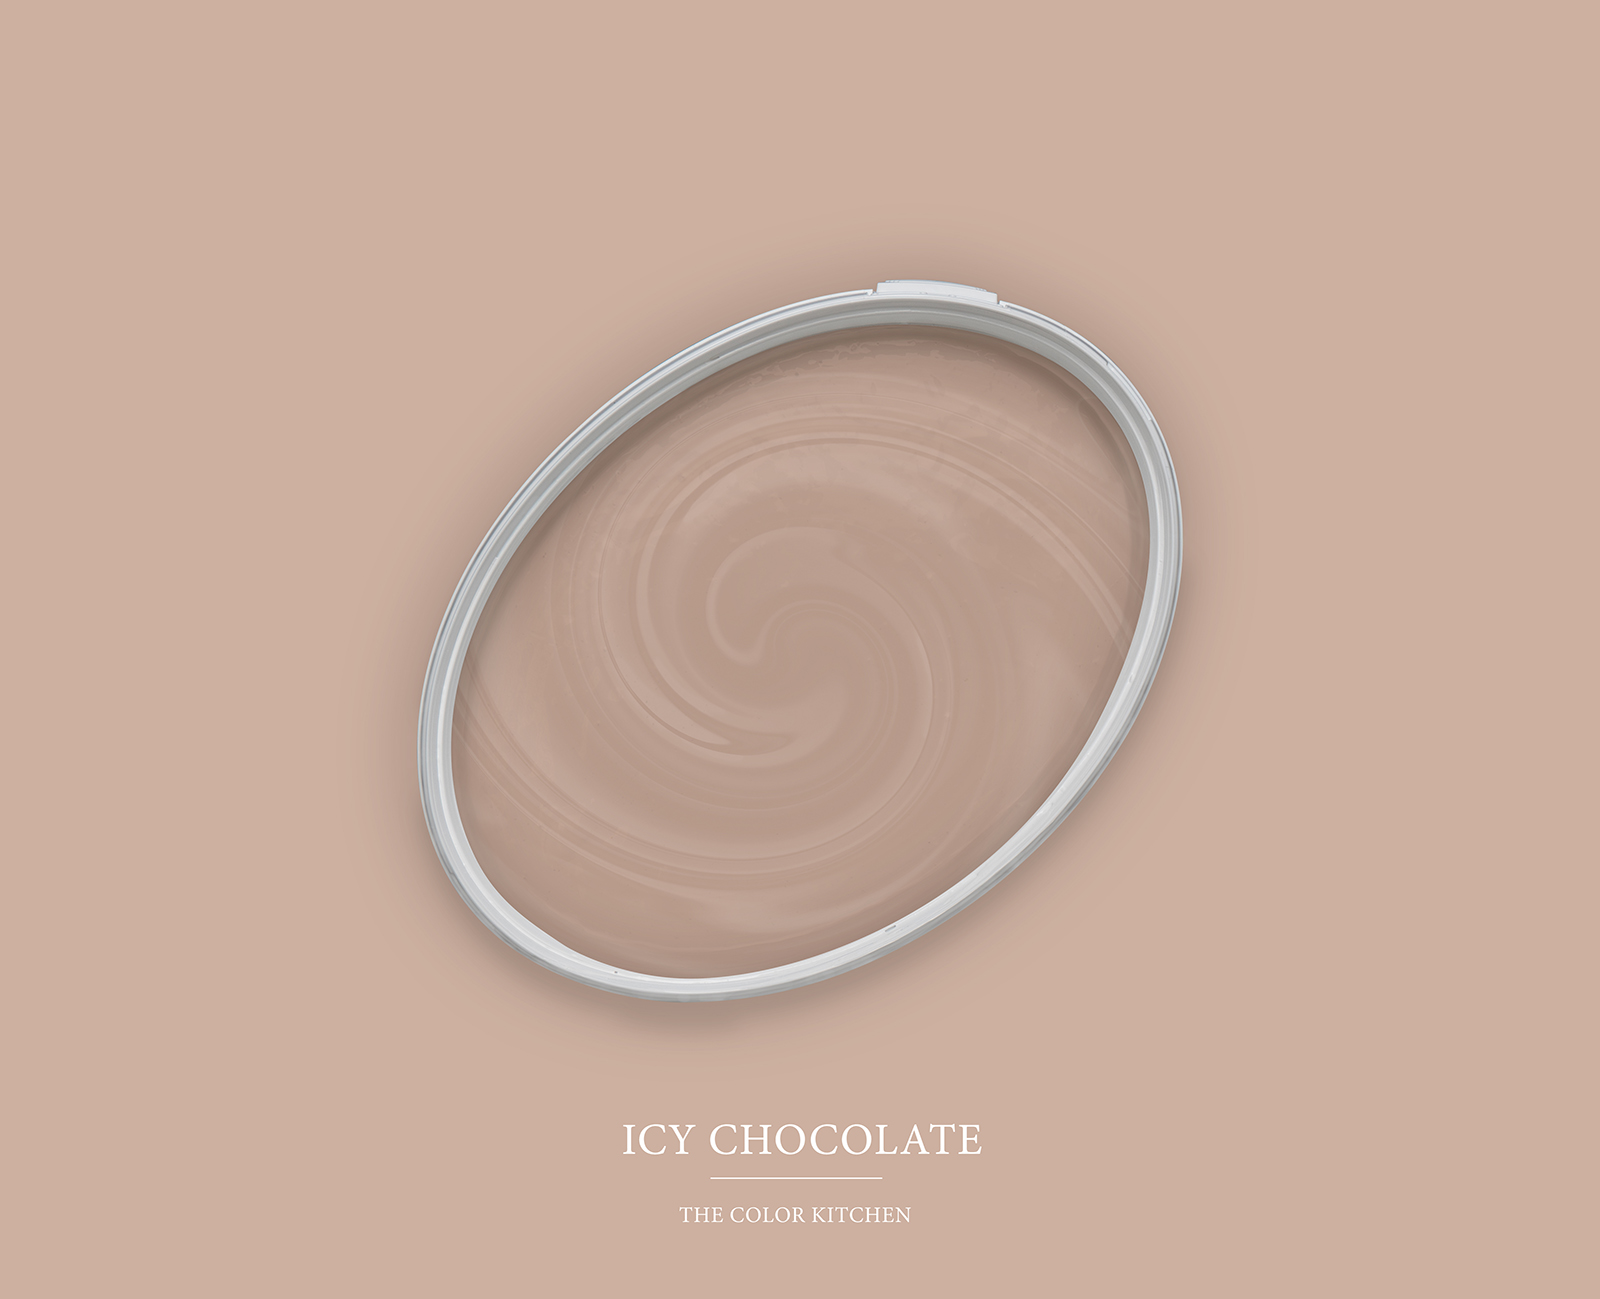         Wandfarbe in zartem Rotbraun »Icy Chocolate« TCK7001 – 2,5 Liter
    